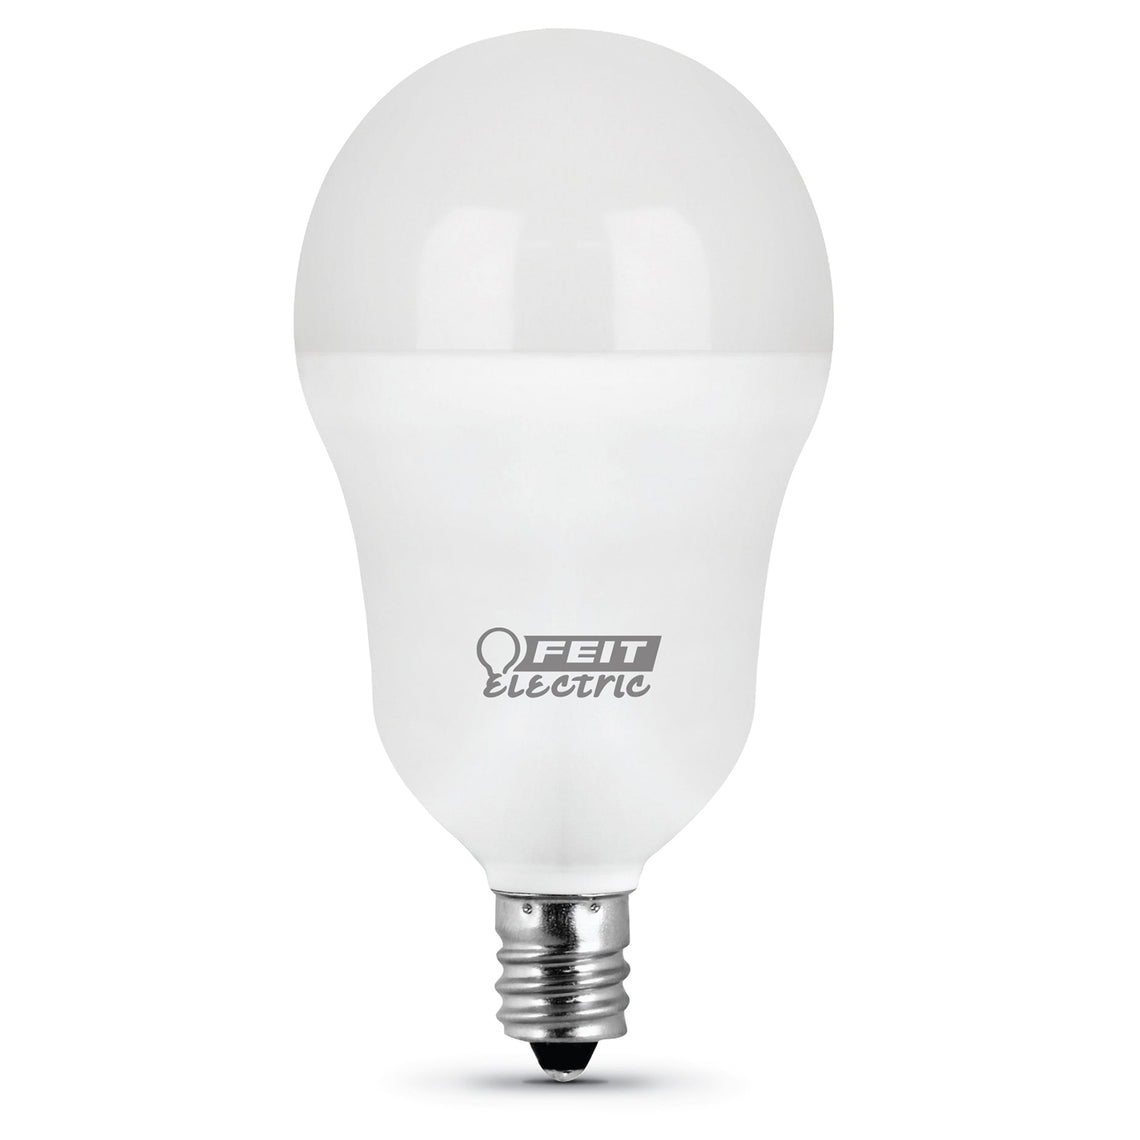 A15 LED Light Bulbs, 6 watts, E12, Candelabra Base, Non-Dimmable, 500 Lumen, 3000K